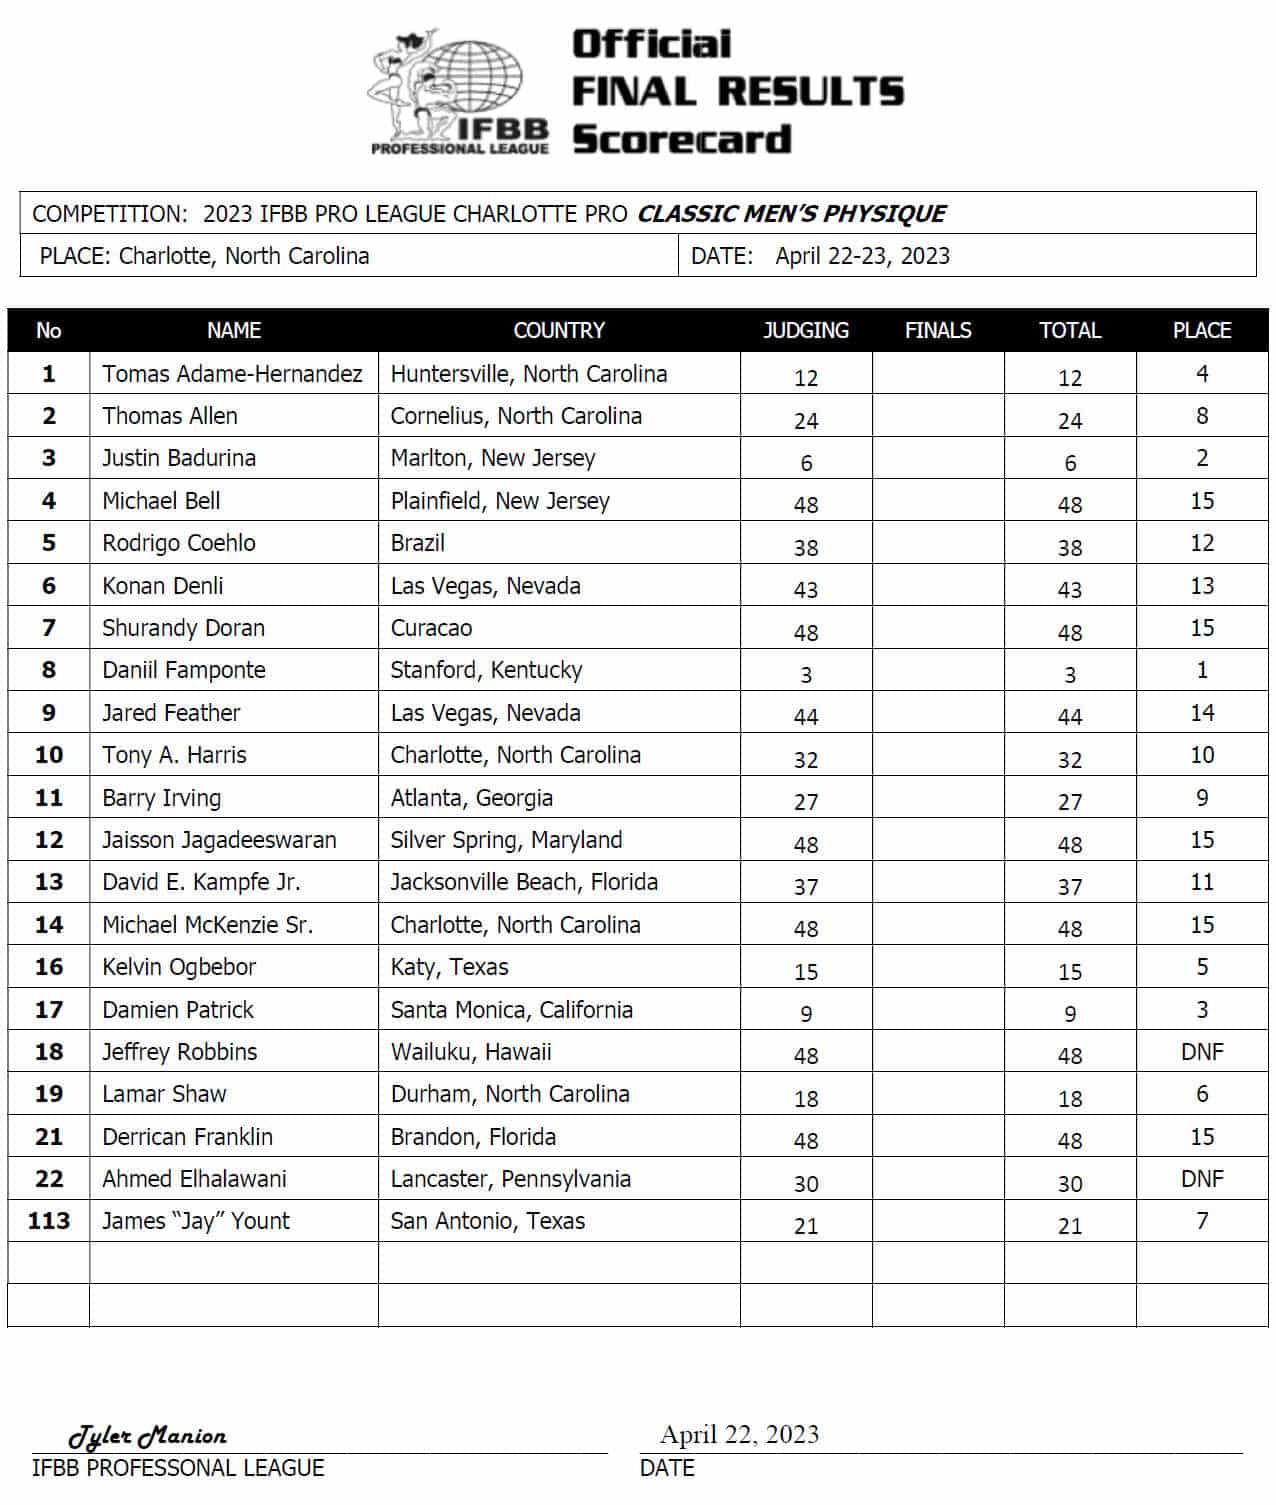 2023 Charlotte Pro Classic Physique Scorecard